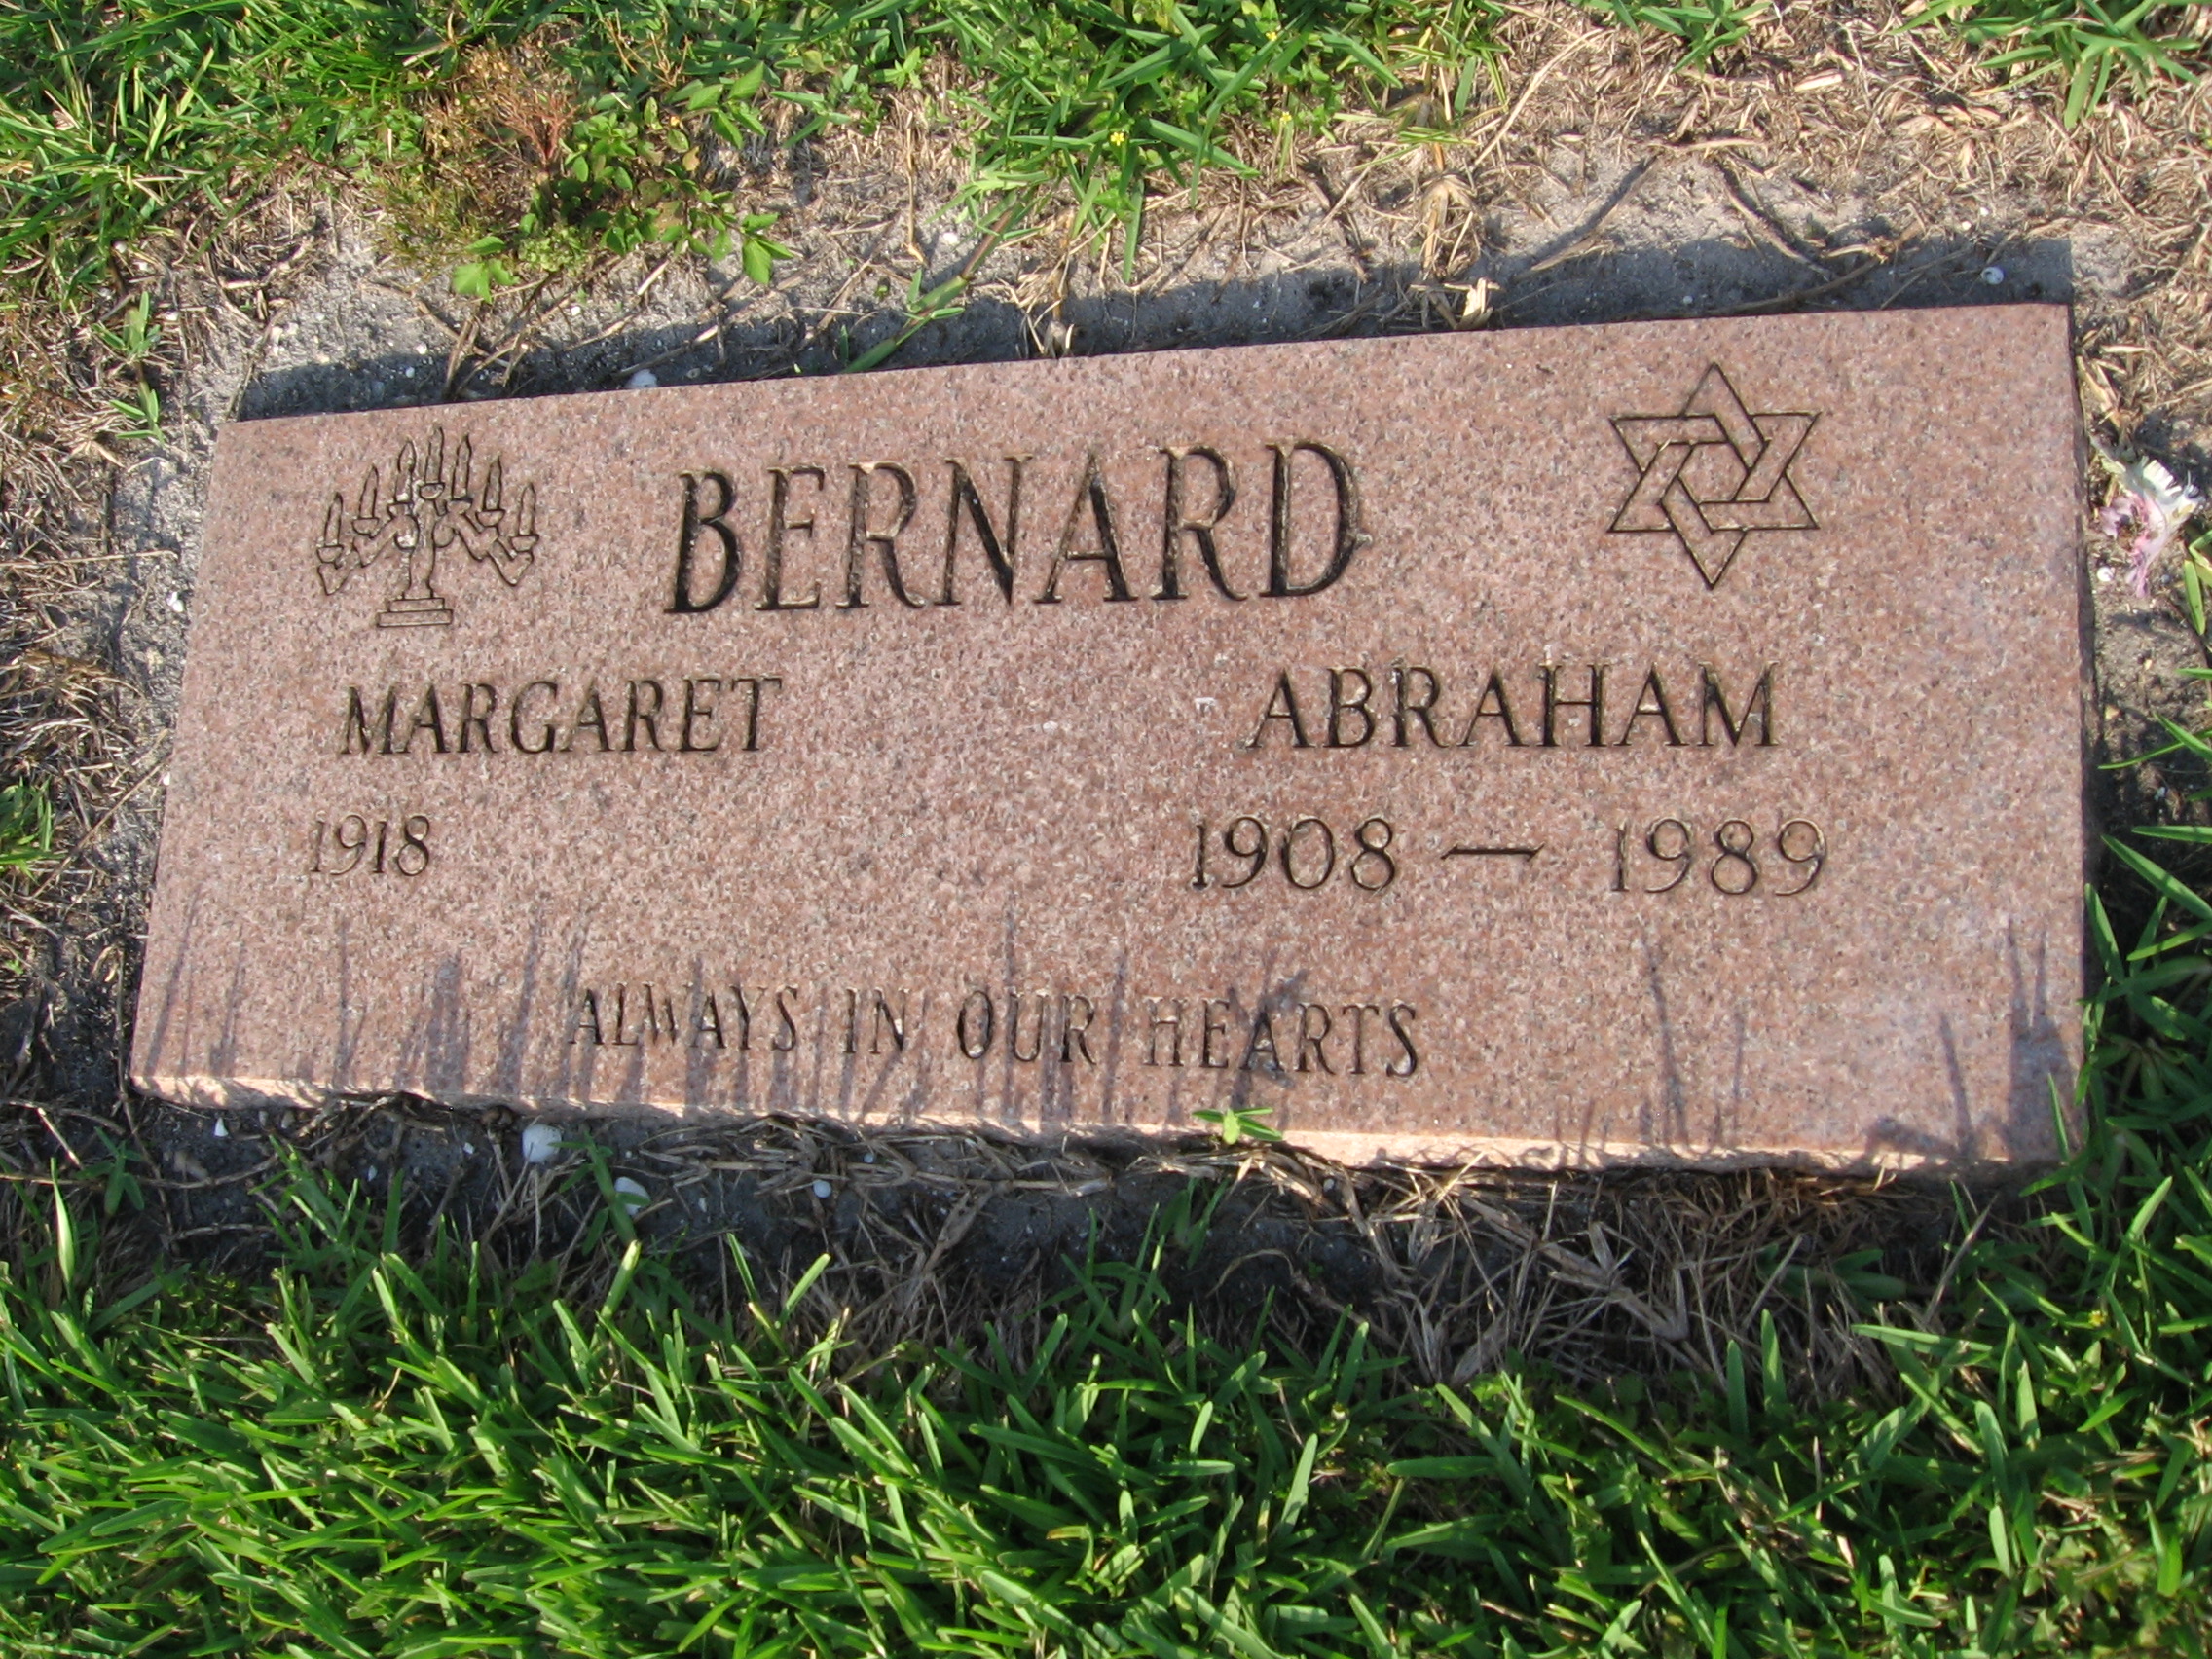 Margaret Bernard